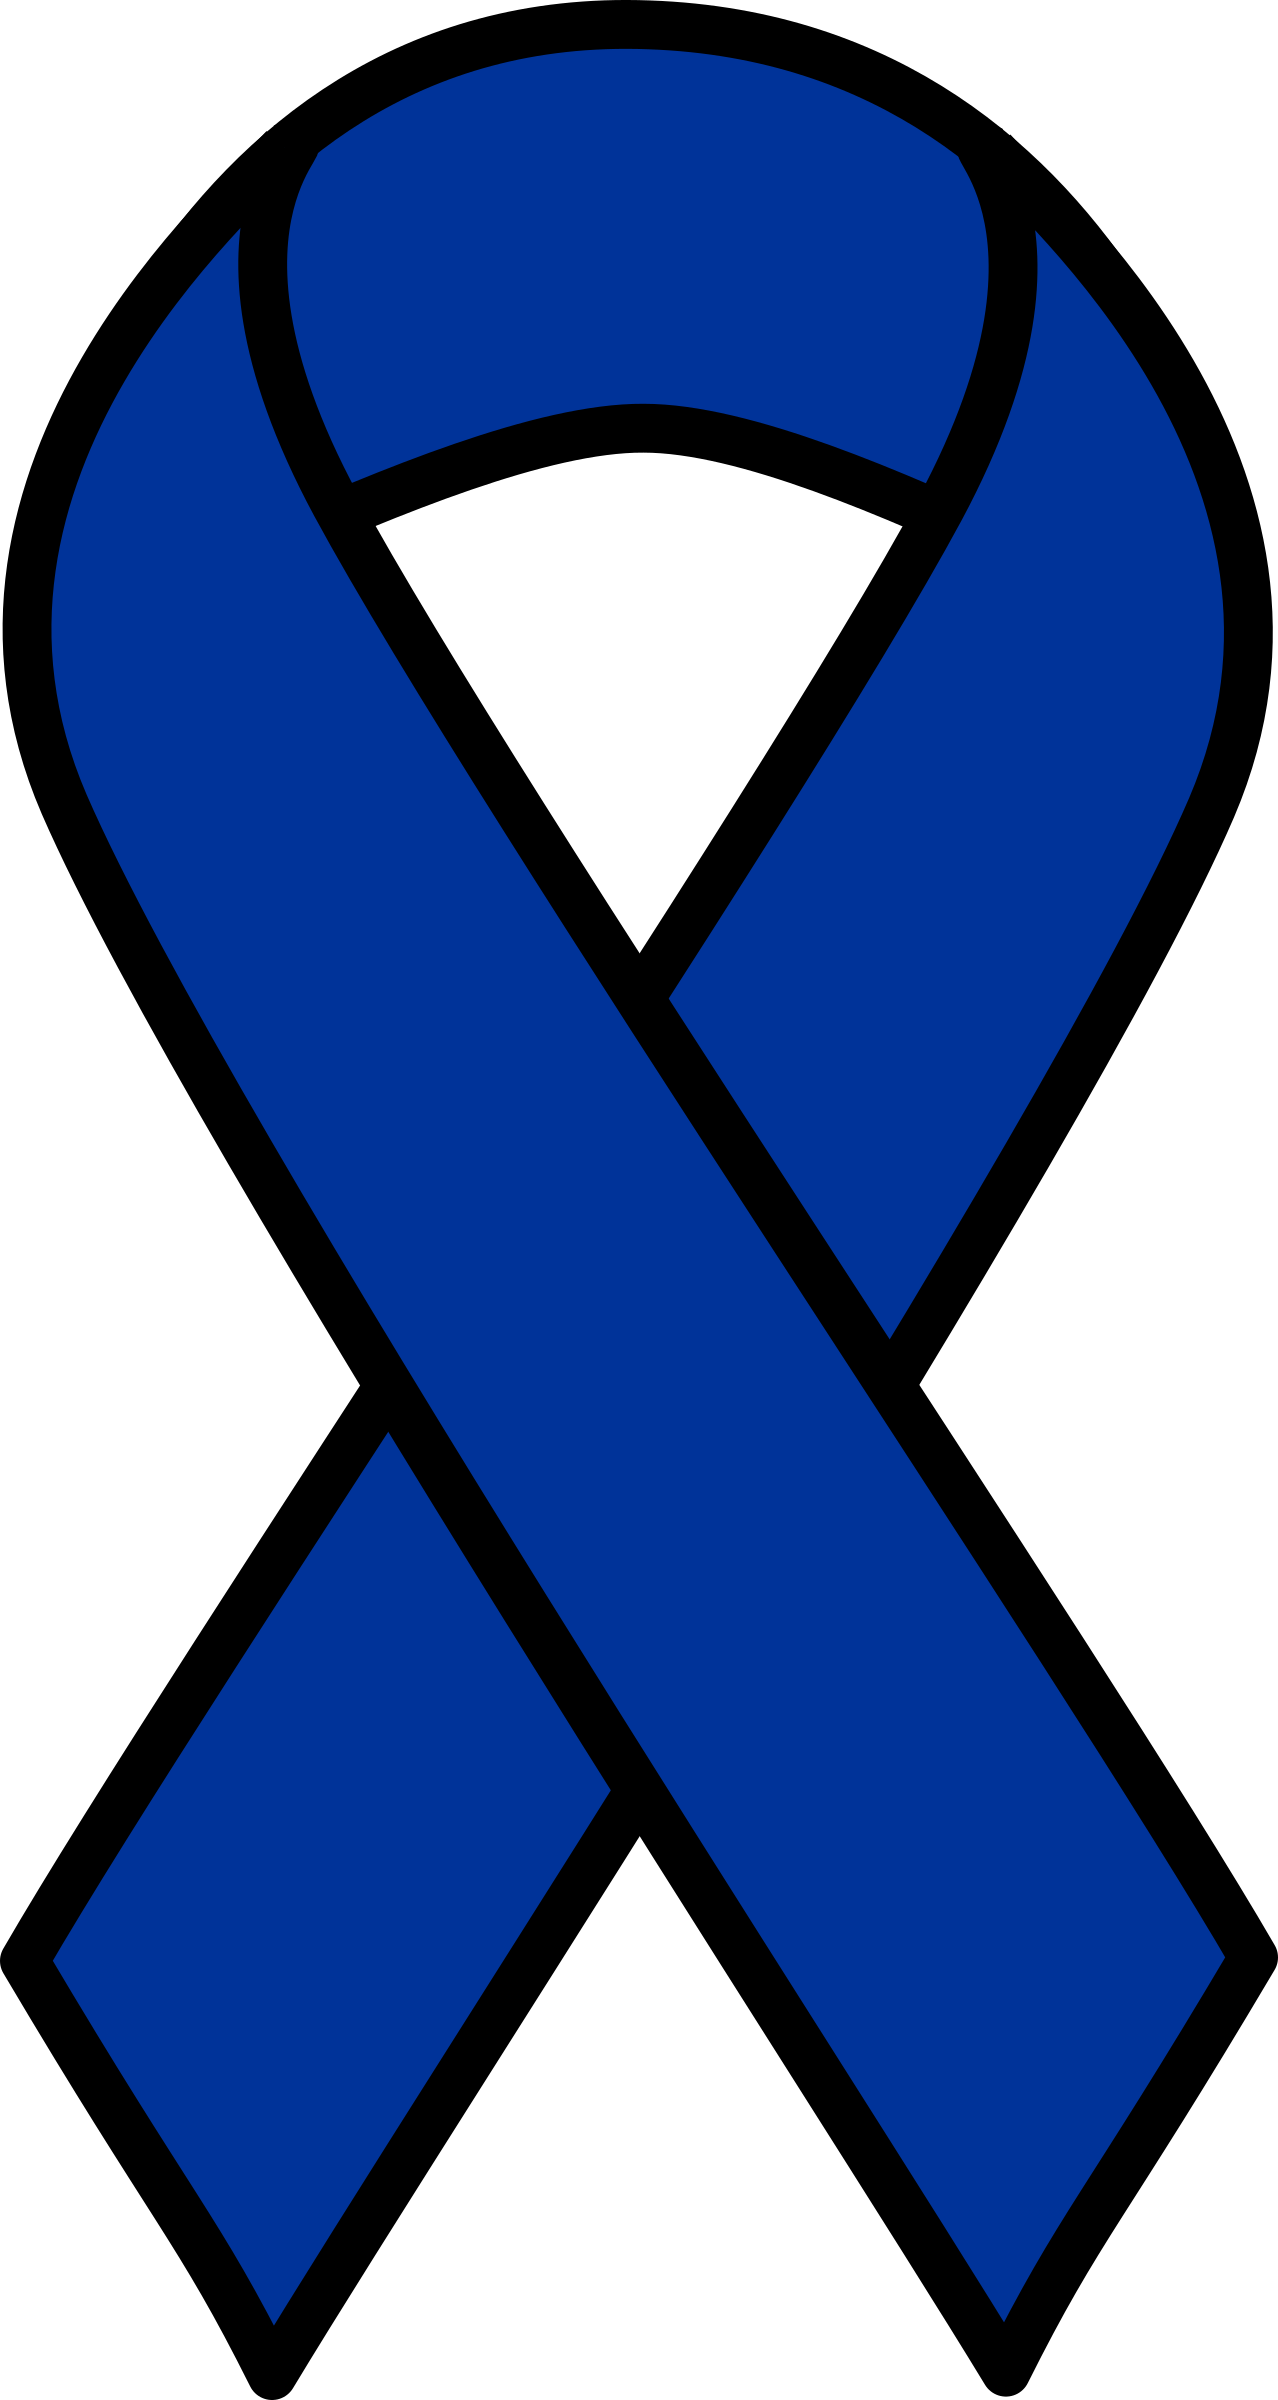 Image result for colon cancer ribbon